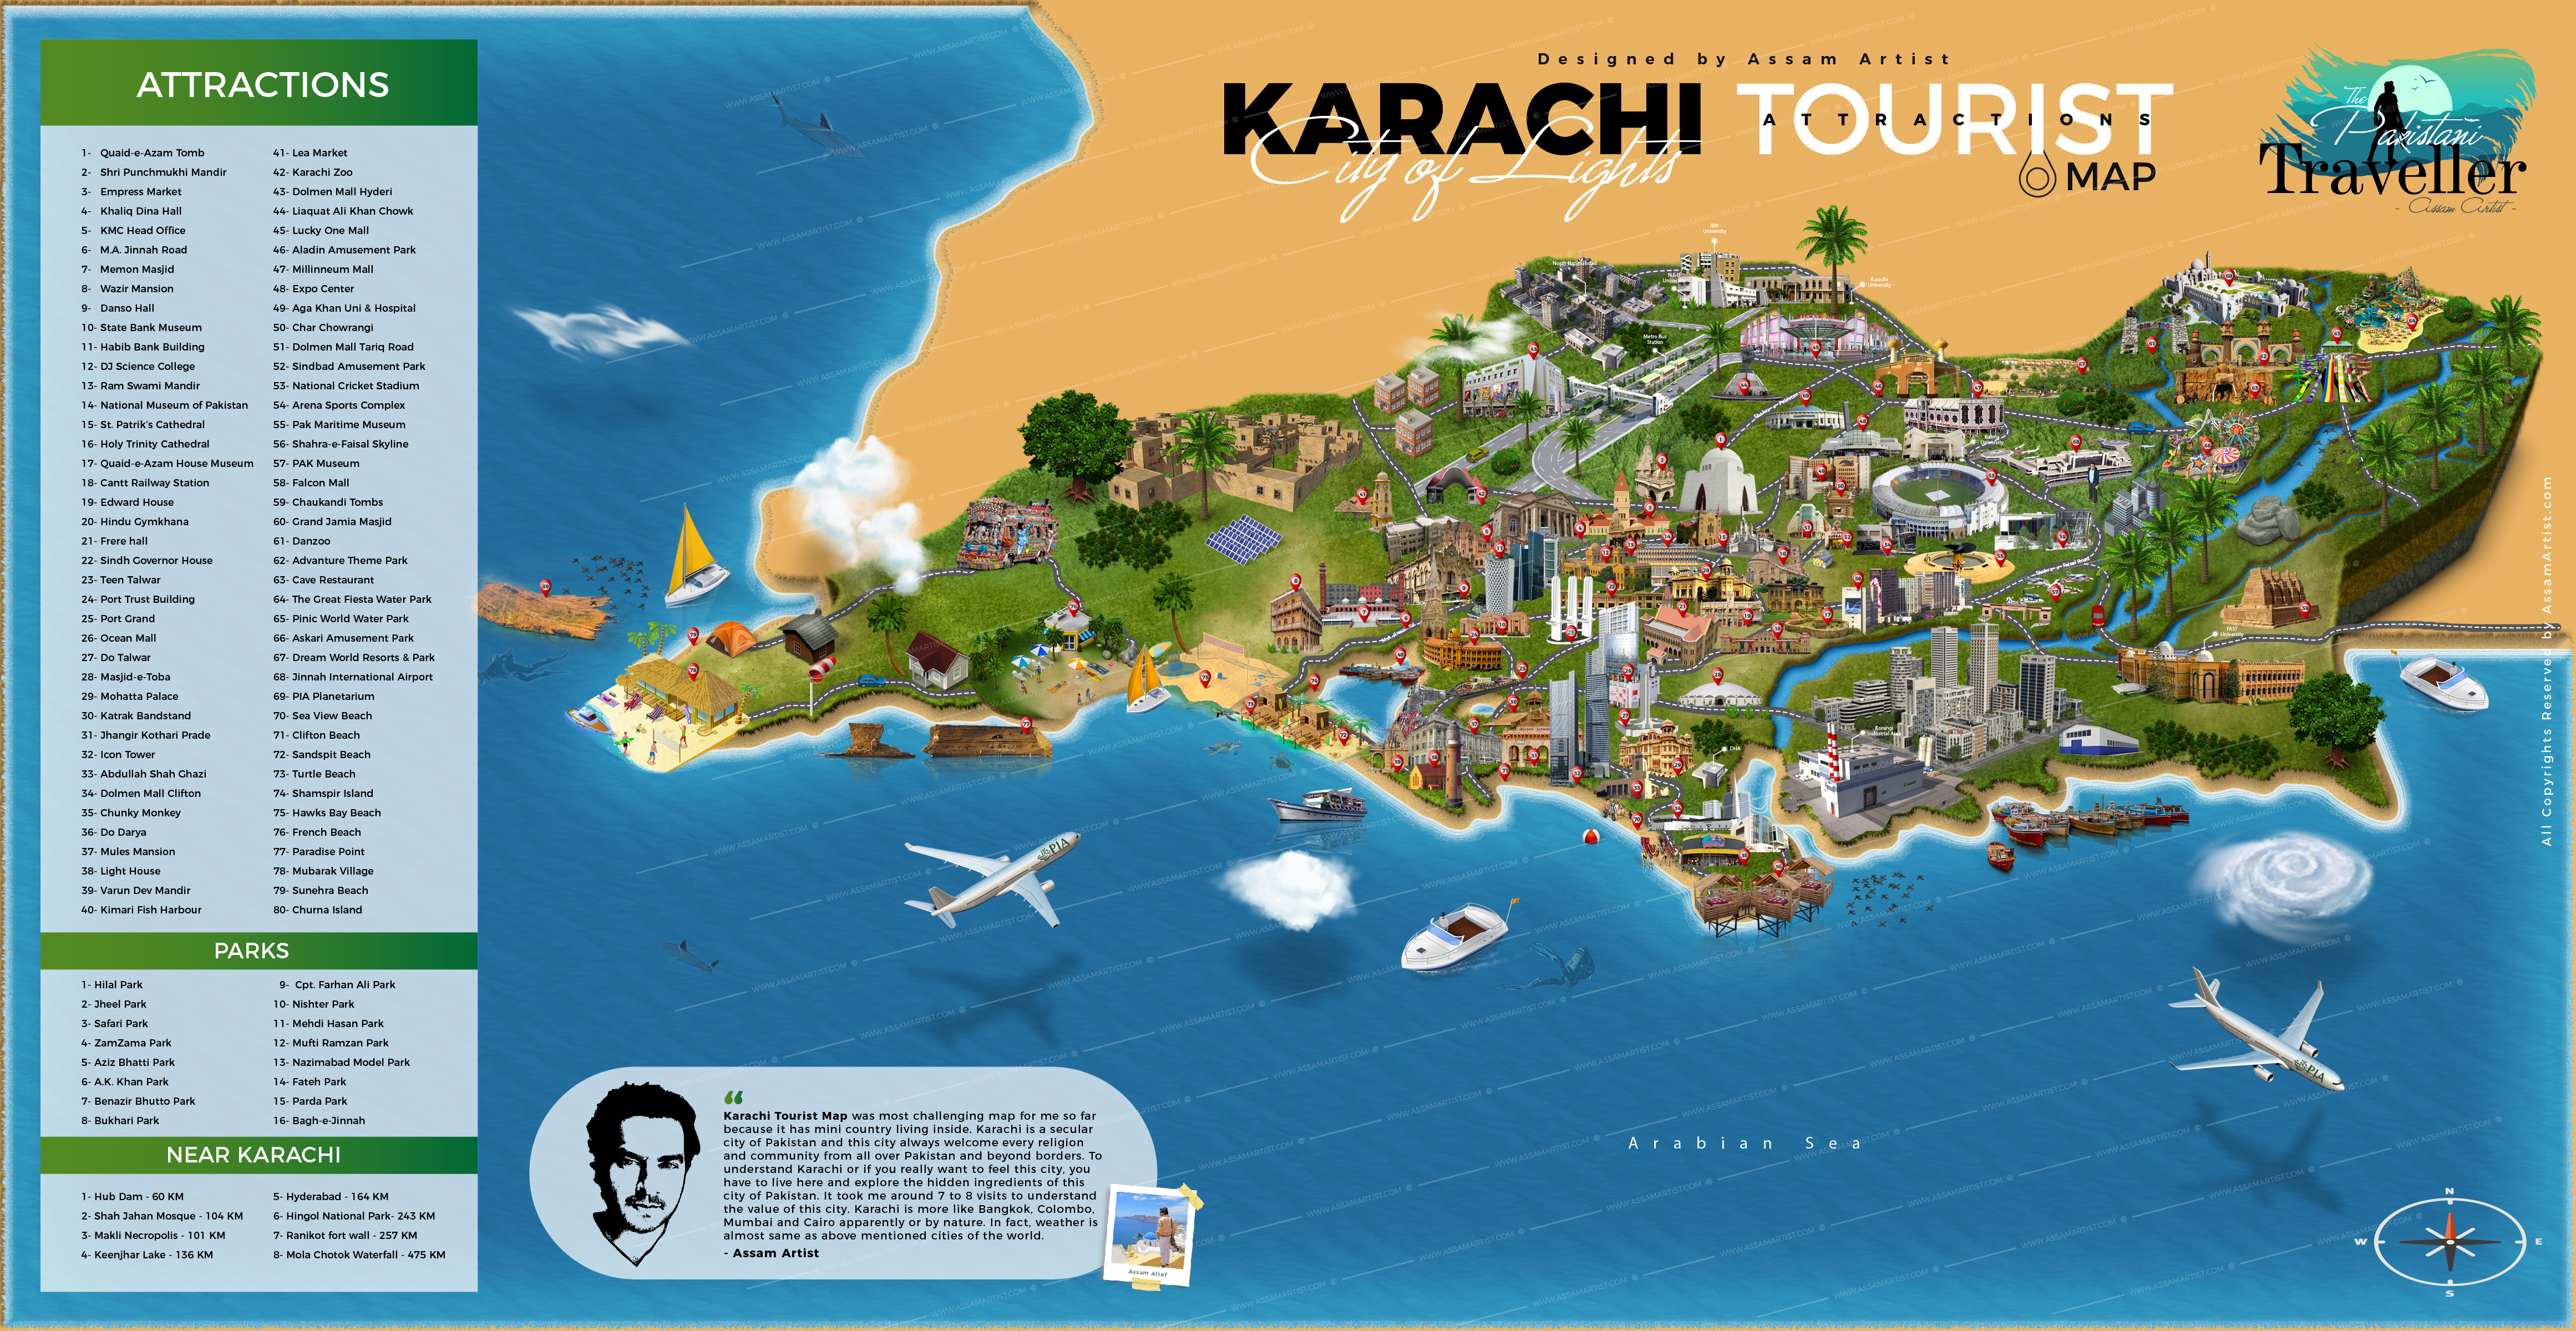 Karachi tourist attractions map - karachi tour guide map